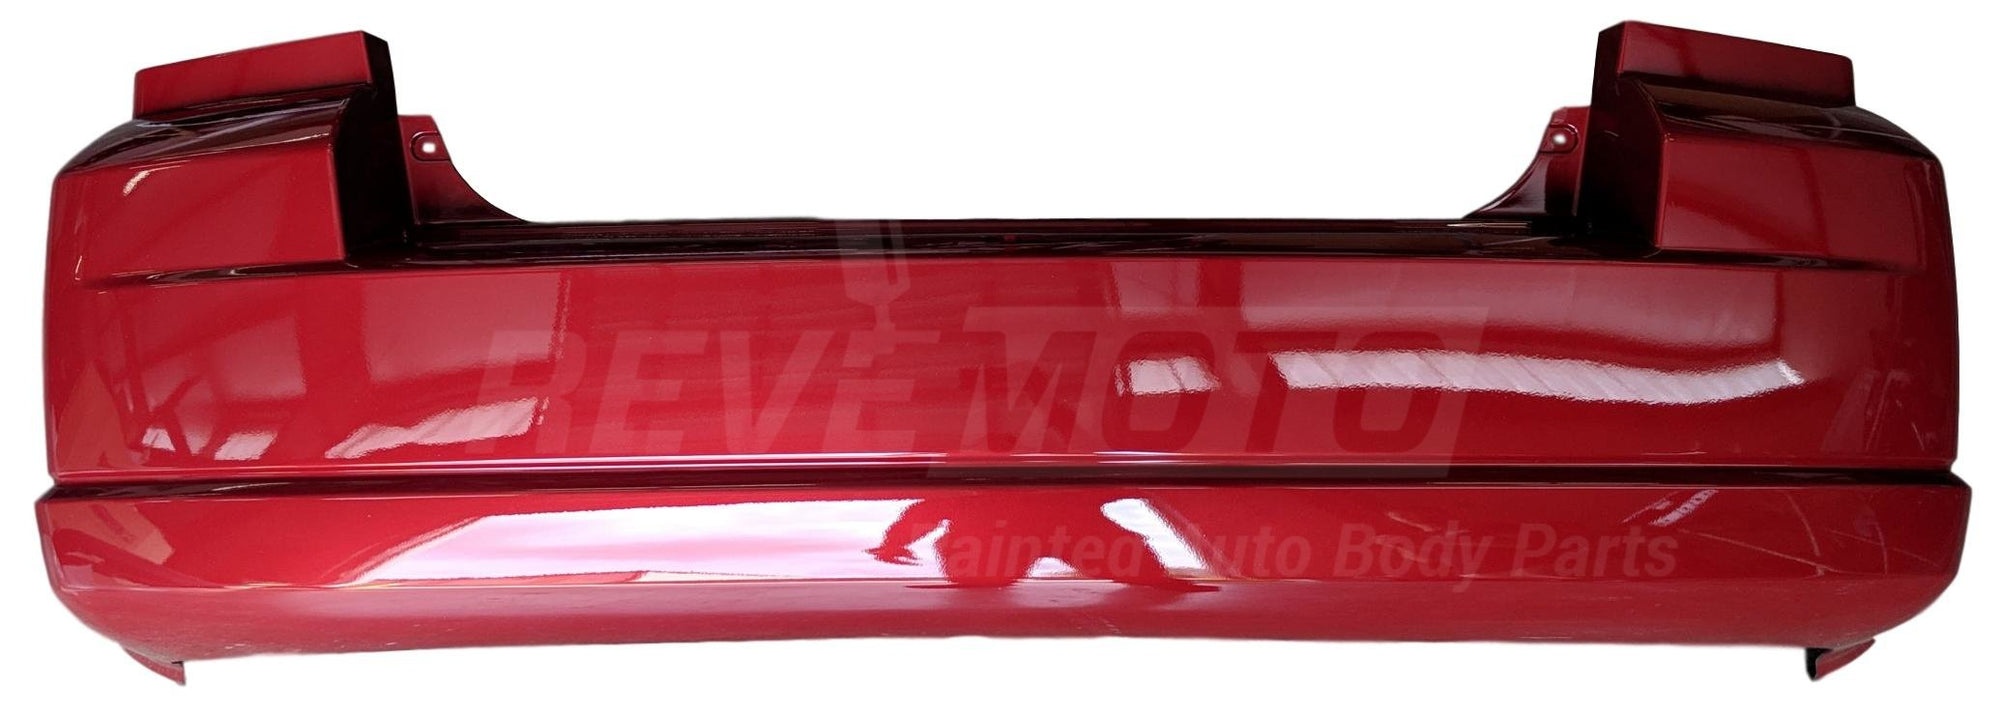 2007 Dodge Caliber : Rear Bumper Painted